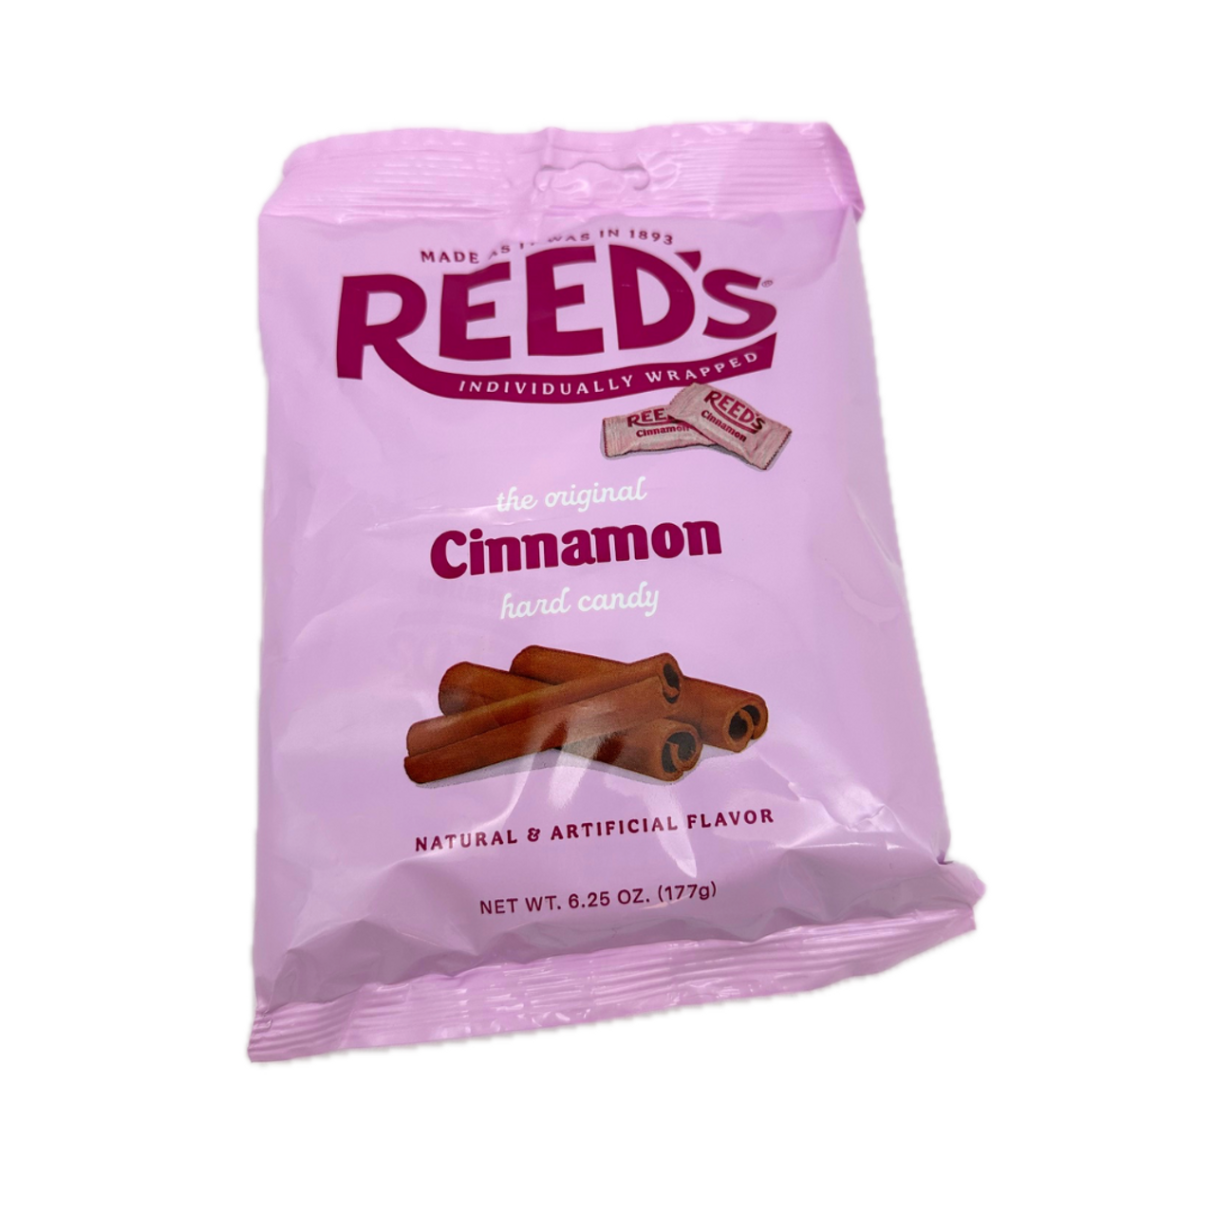 Reed's Cinnamon Hard Candy 6.25oz - 12ct